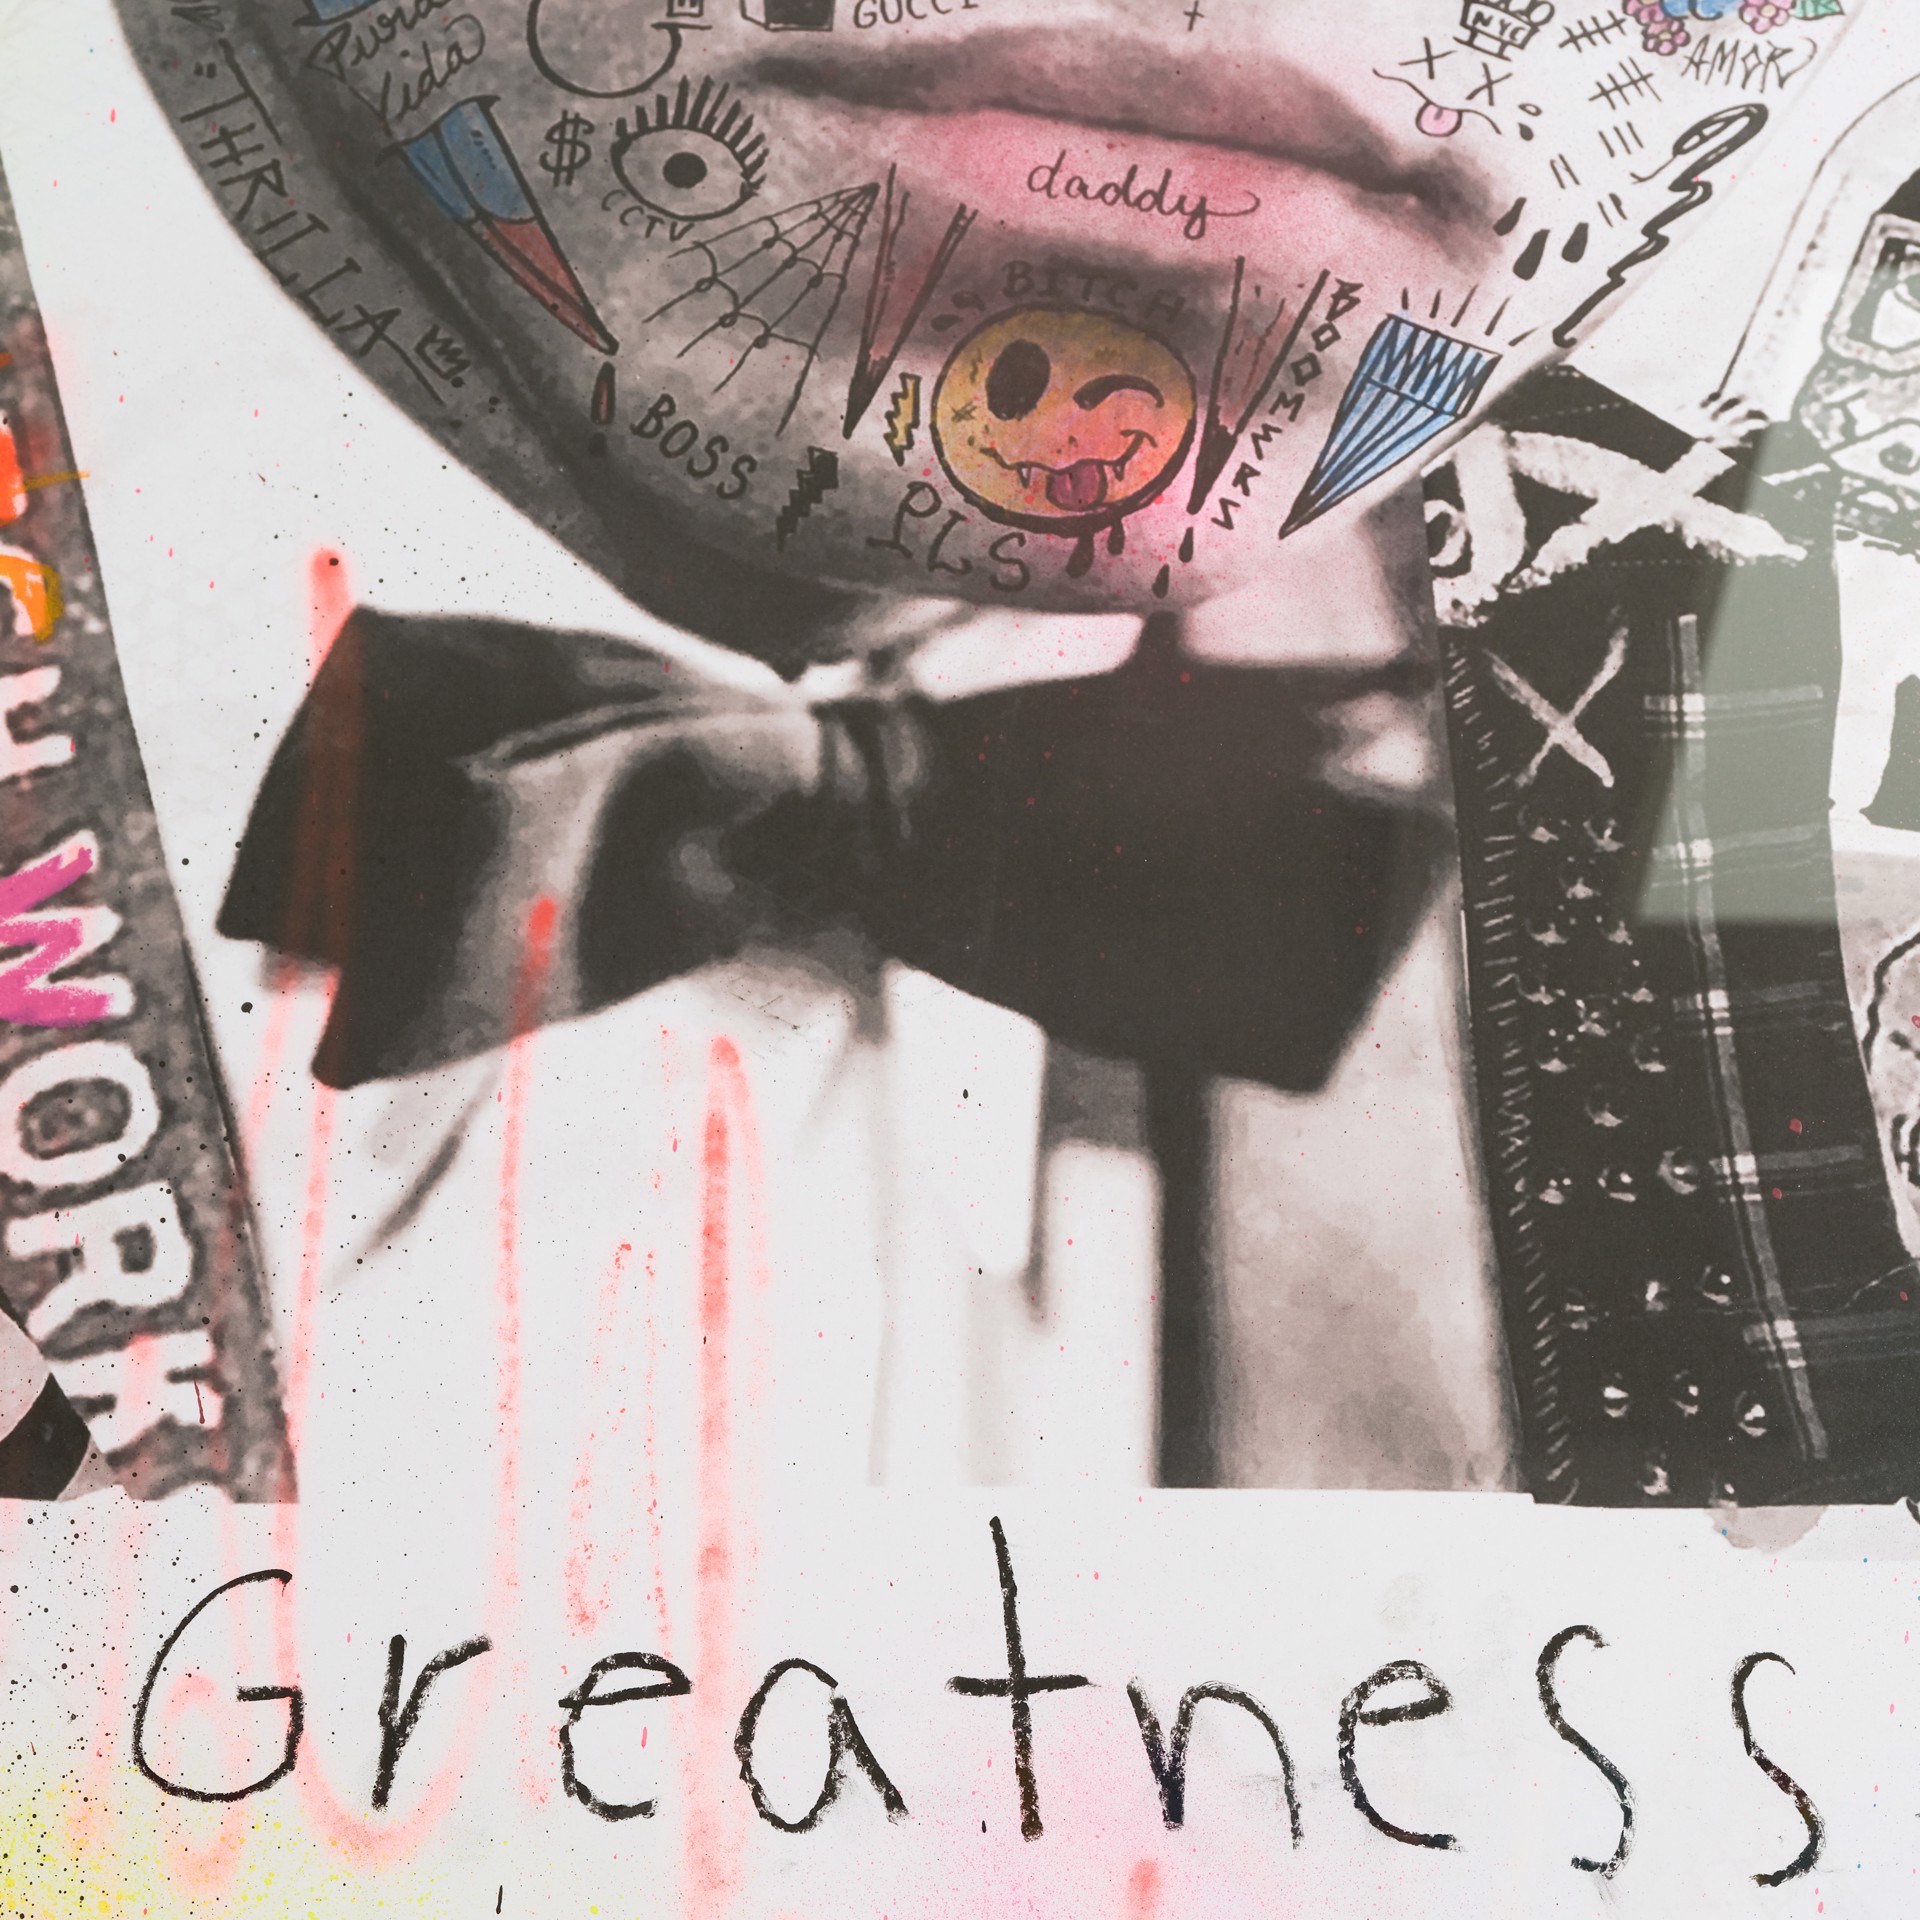 Muhammad Ali "Greatness" by Stikki Peaches